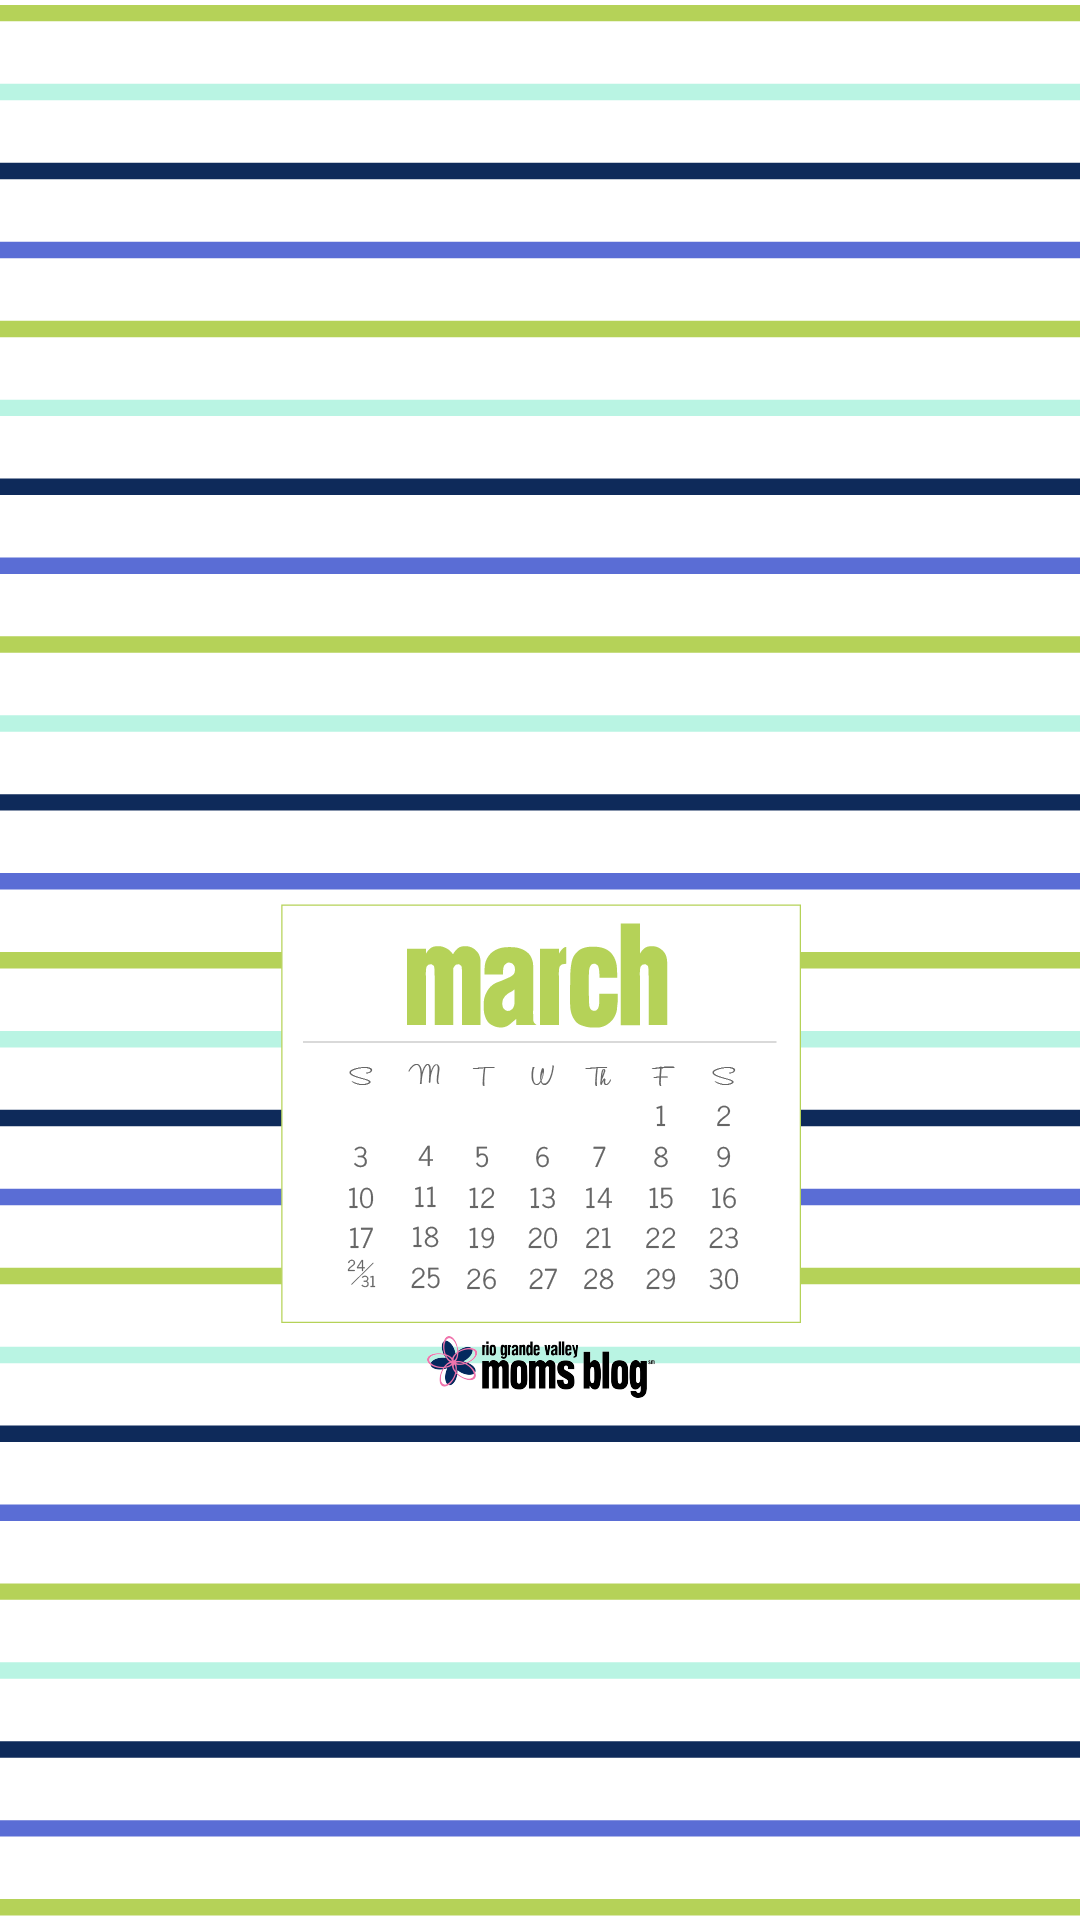 March 2019 - Calendar - Stripes